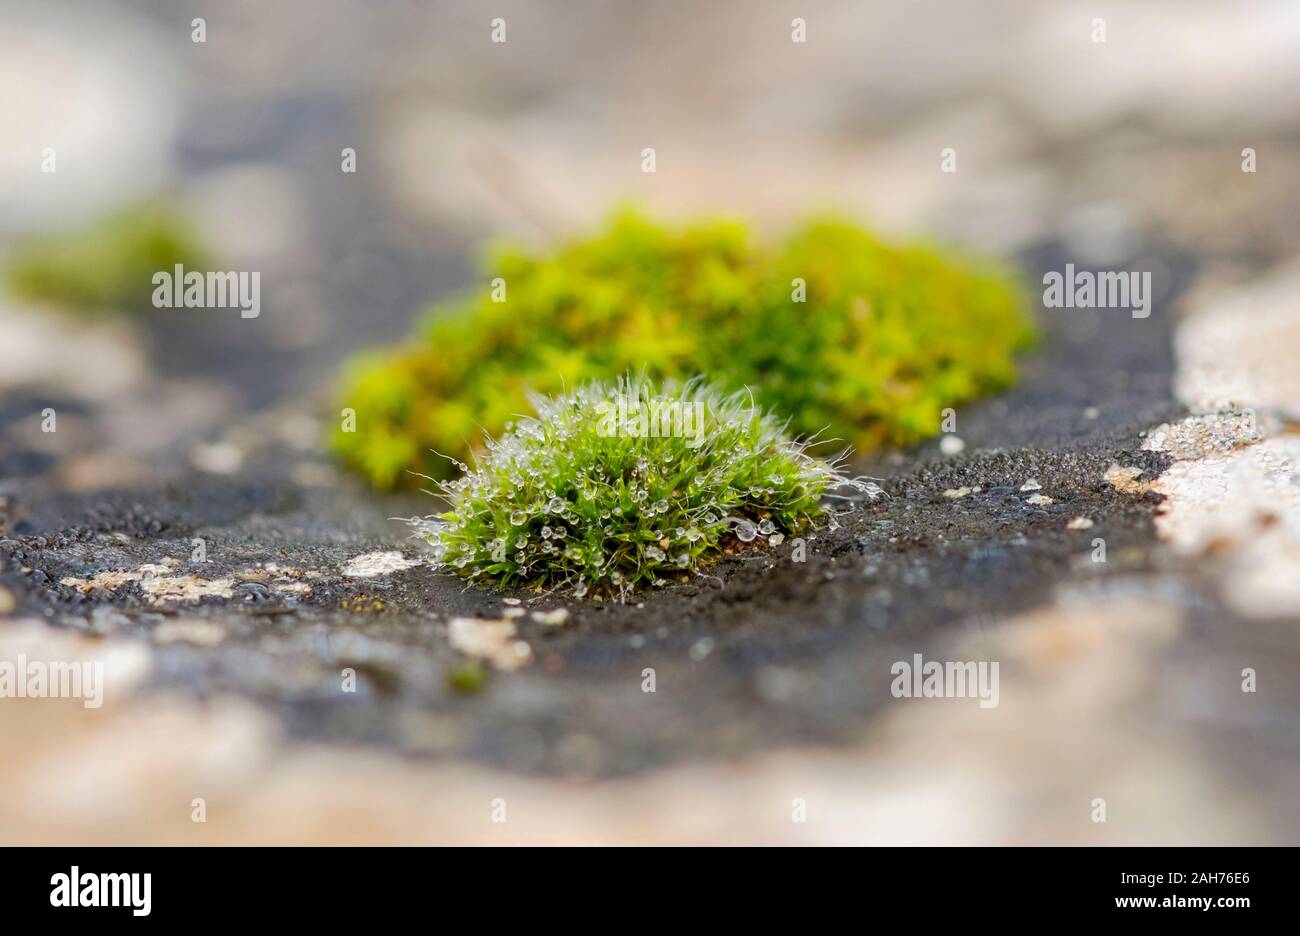 Peat moss, Clump of moss, Sphagnum, on rock underground. Spain. Stock Photo